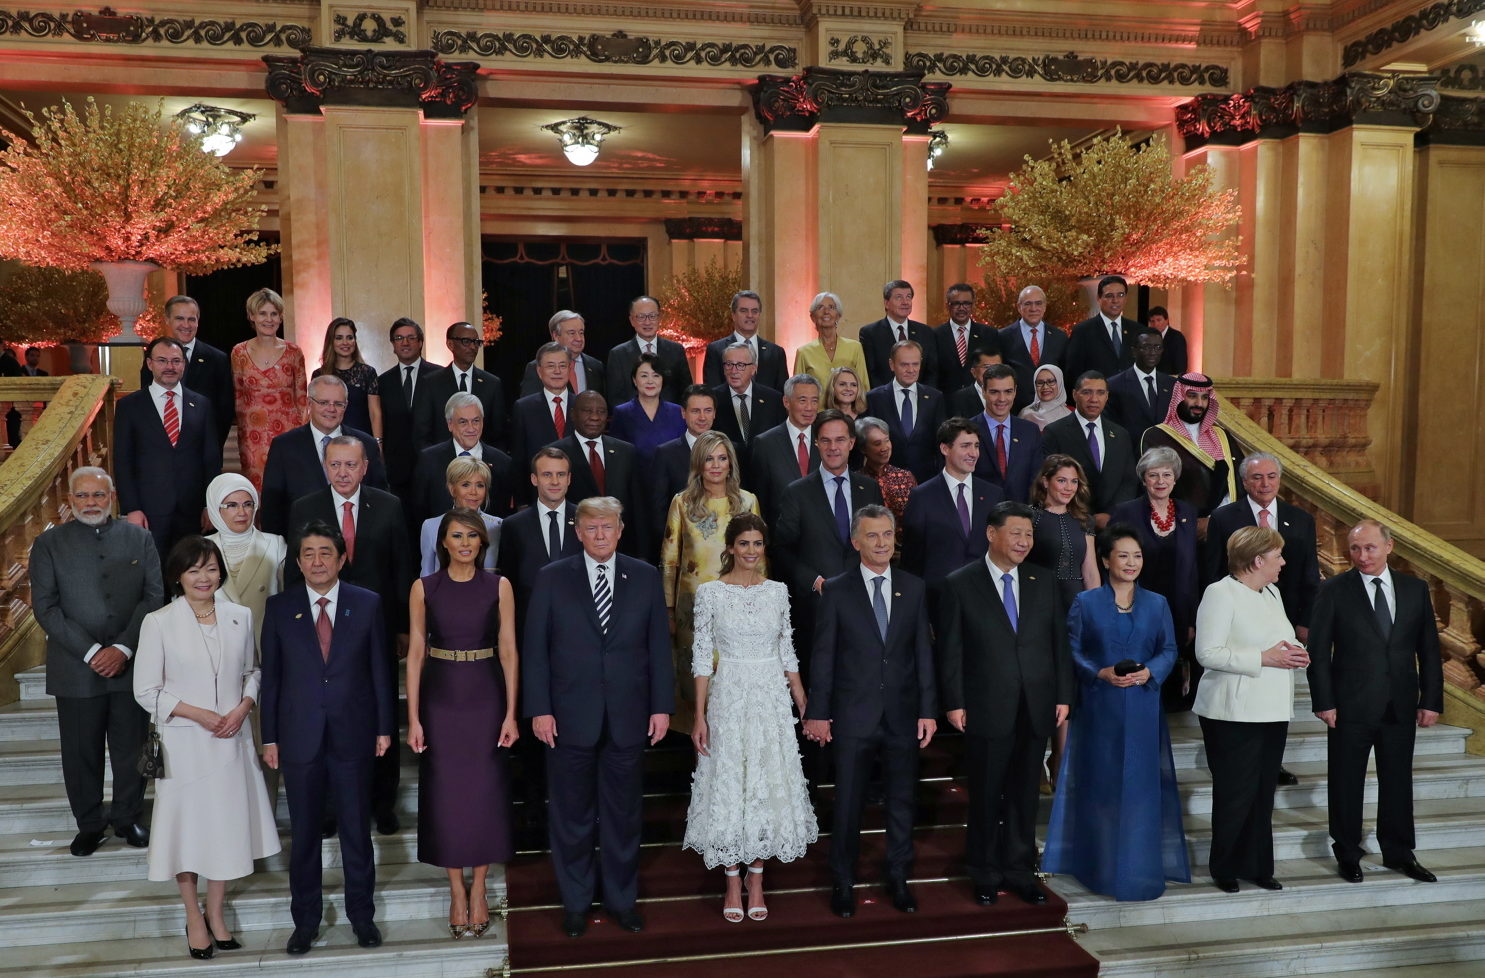 ANP-G20-top-groepsfoto-van-alle-wereldleiders-inclusief-Maxima-en-Mark-Rutte